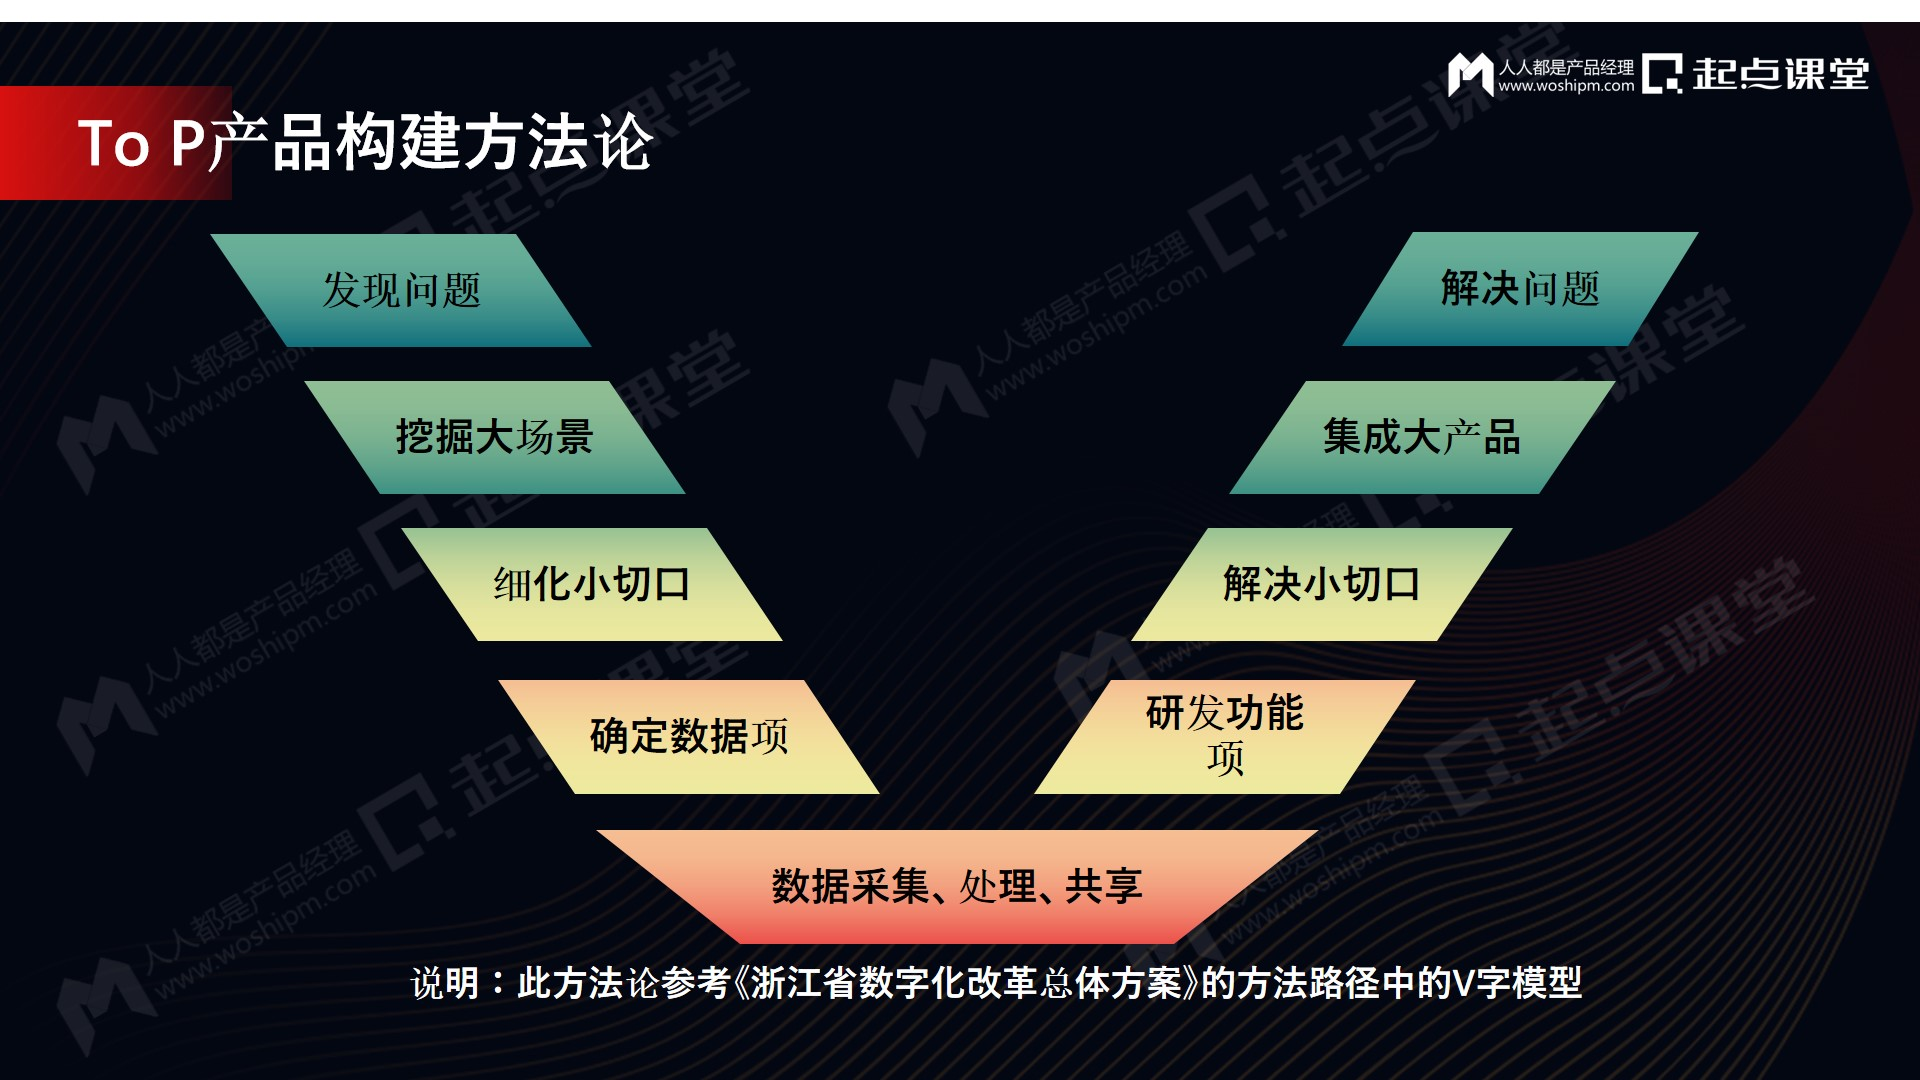 v字模型这是浙江省数字化的总体方案里面的一个v 字模型.